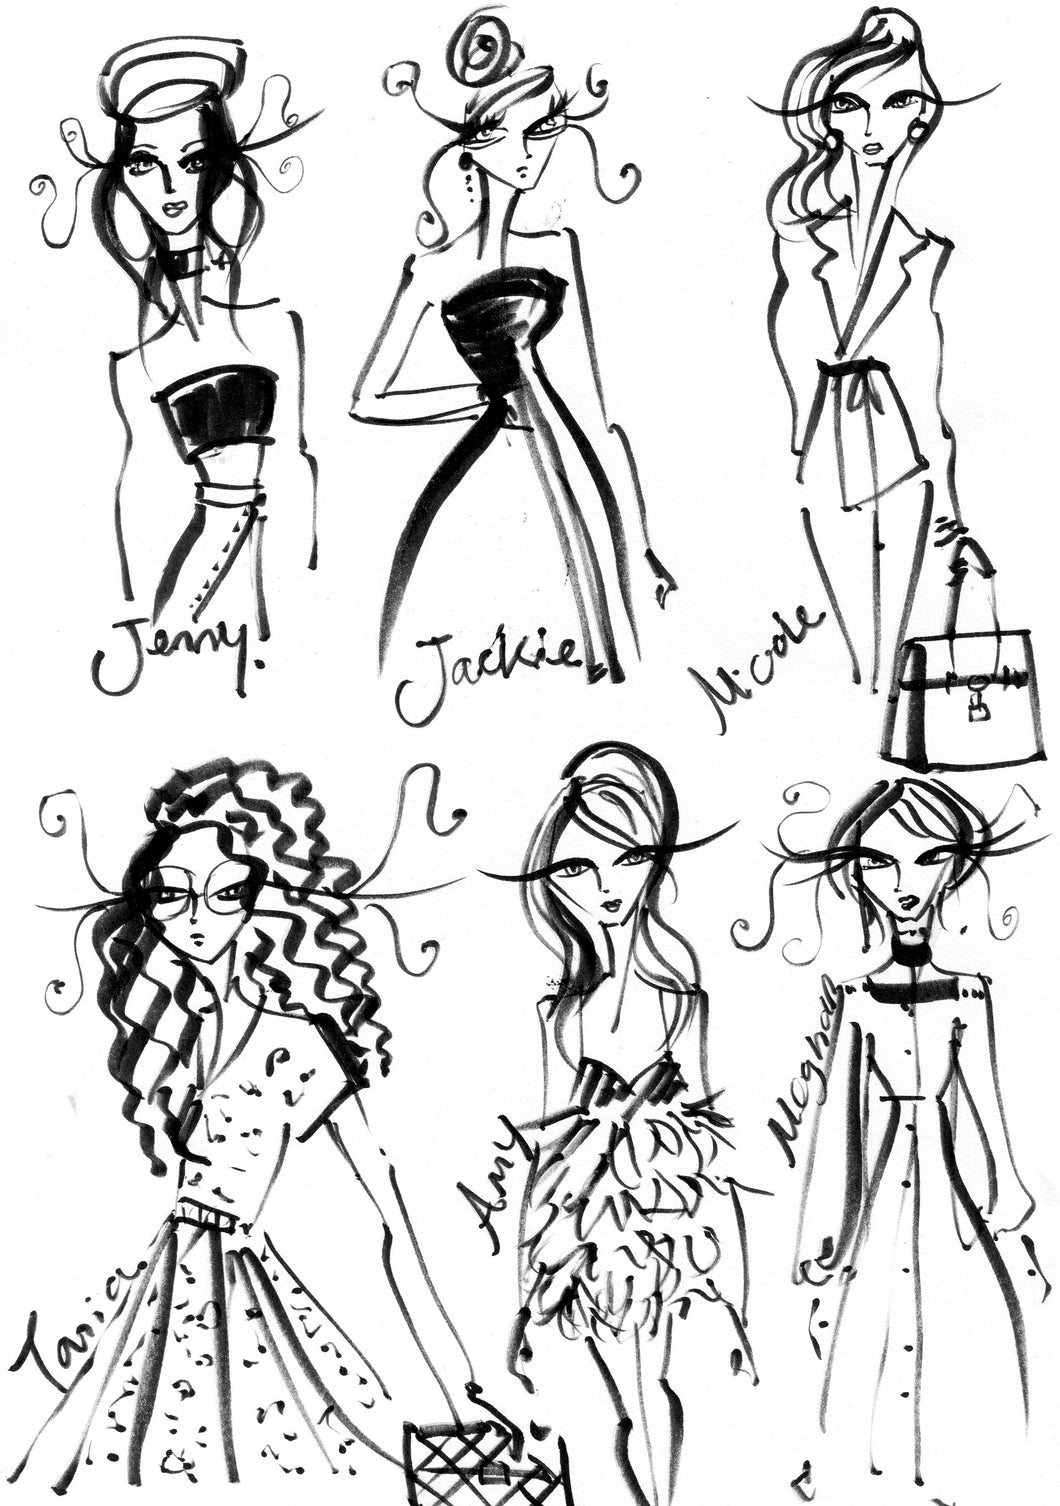 Imaginary Fashion Divas - Fashion Illustration by Talia Zoref